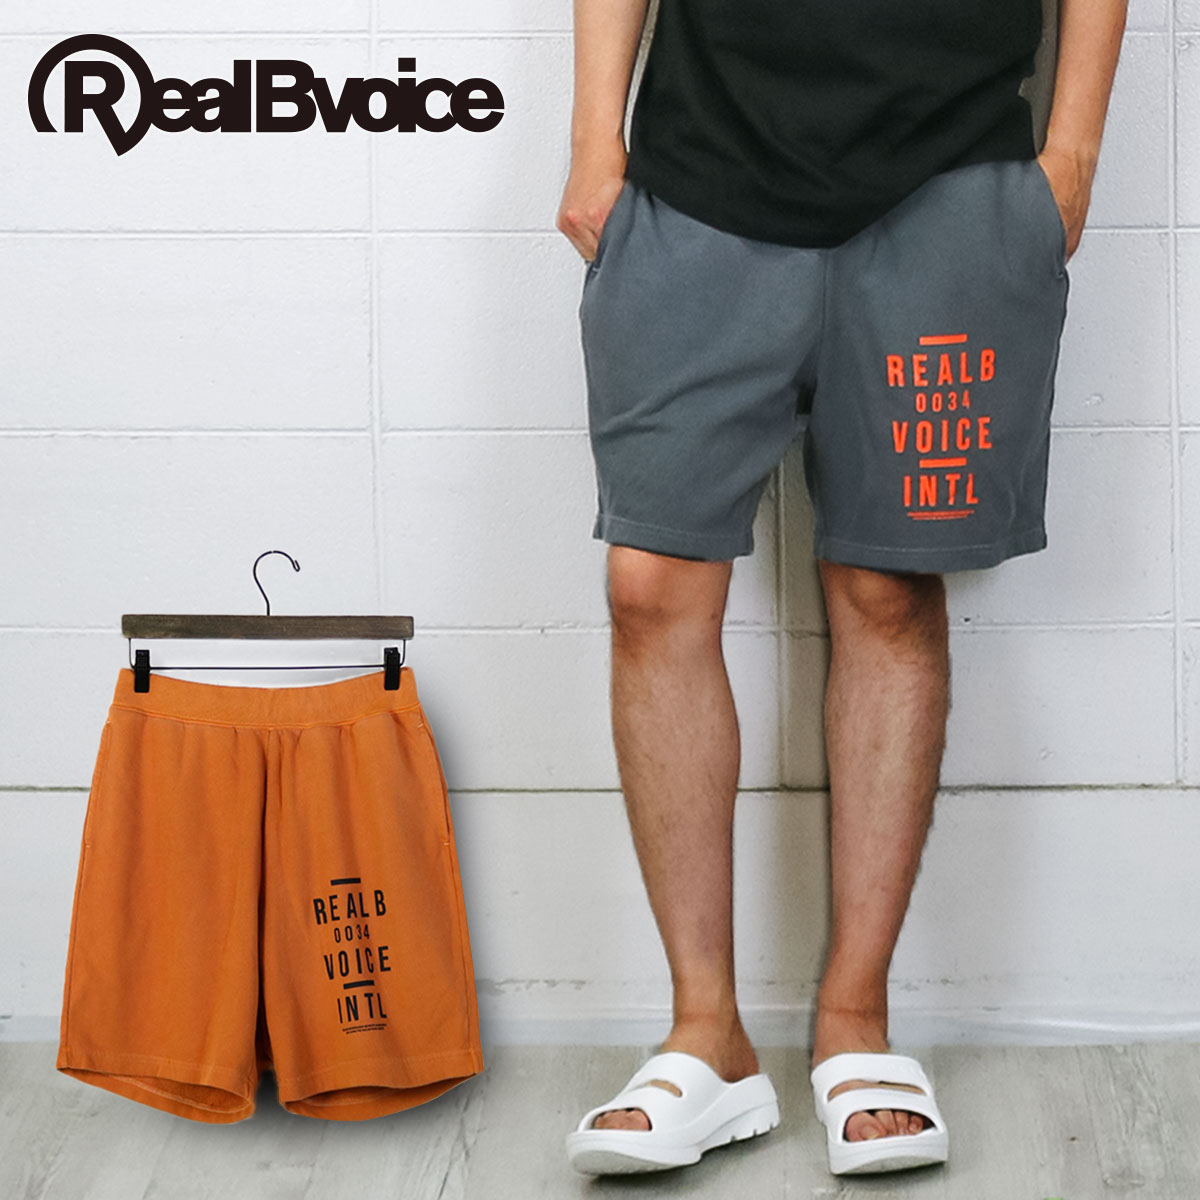 RealBvoice(リアルビーボイス) REAL B 0034 SWEAT SHORTS